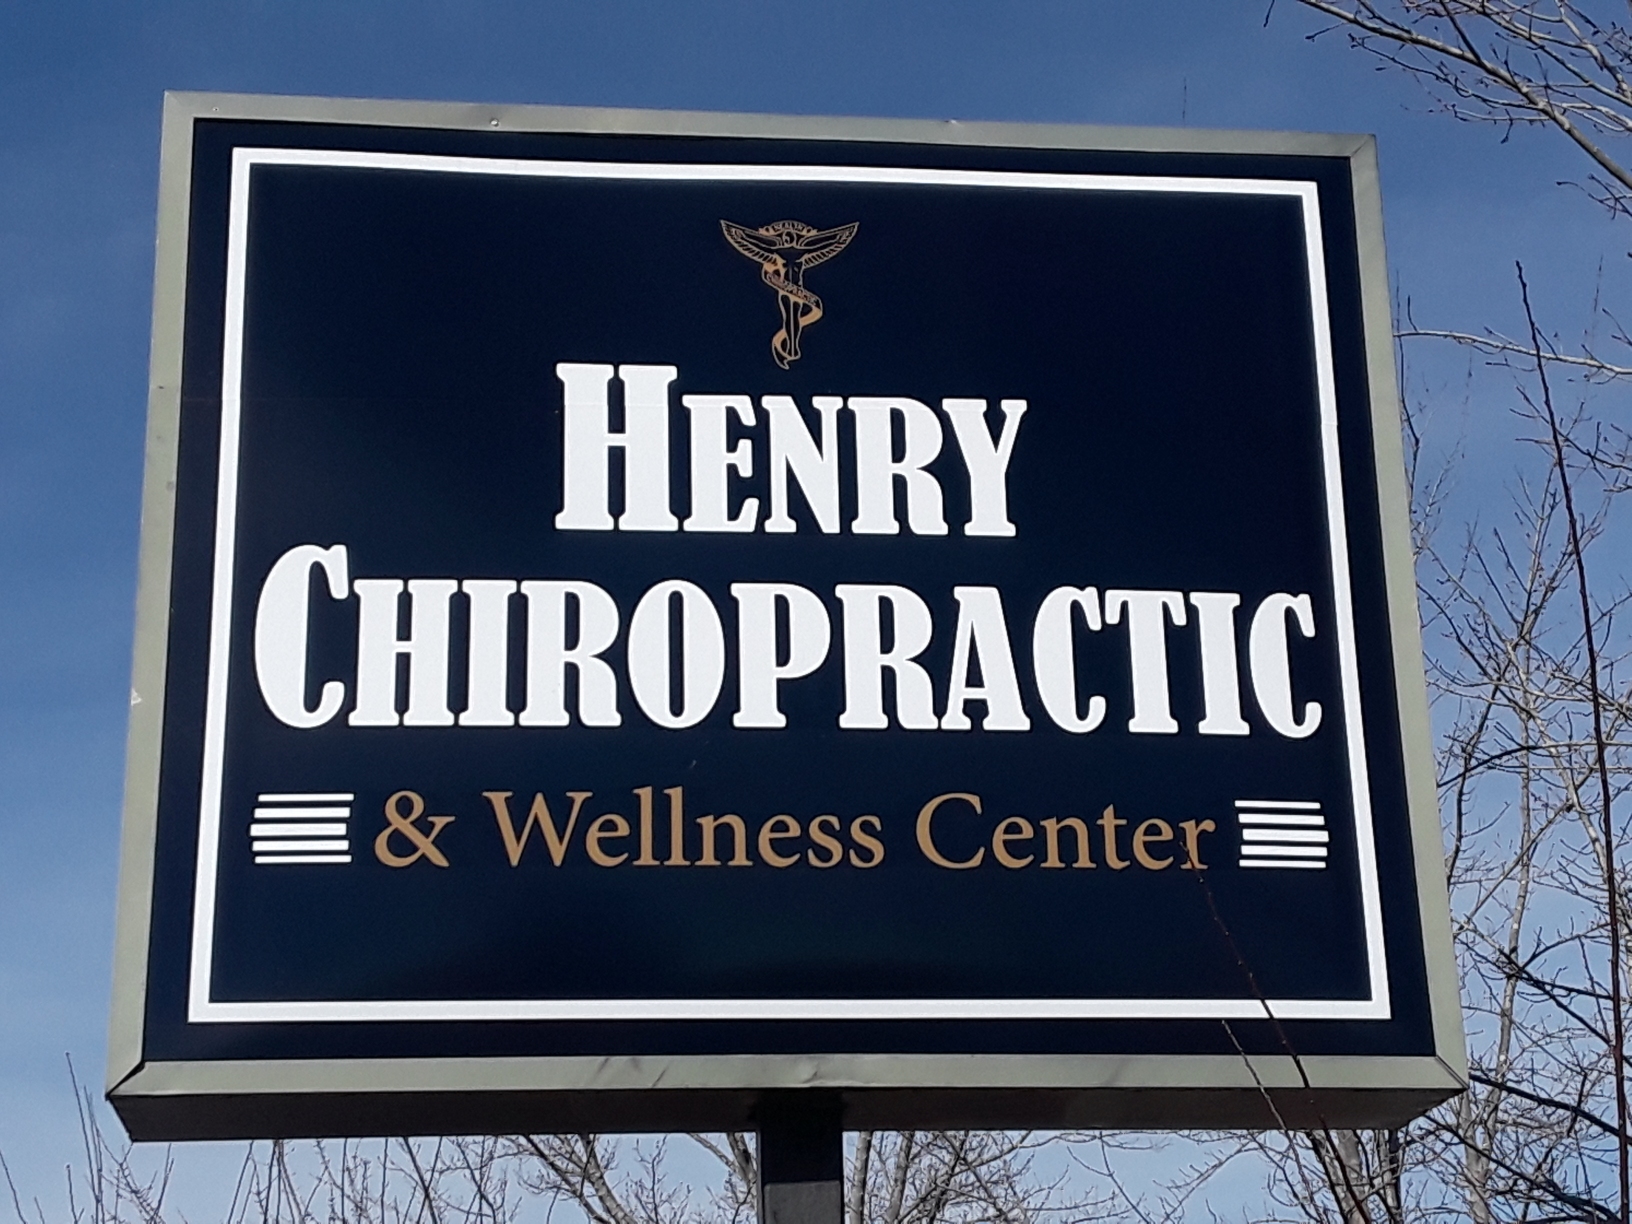 Henry Chiropractic & Wellness Center